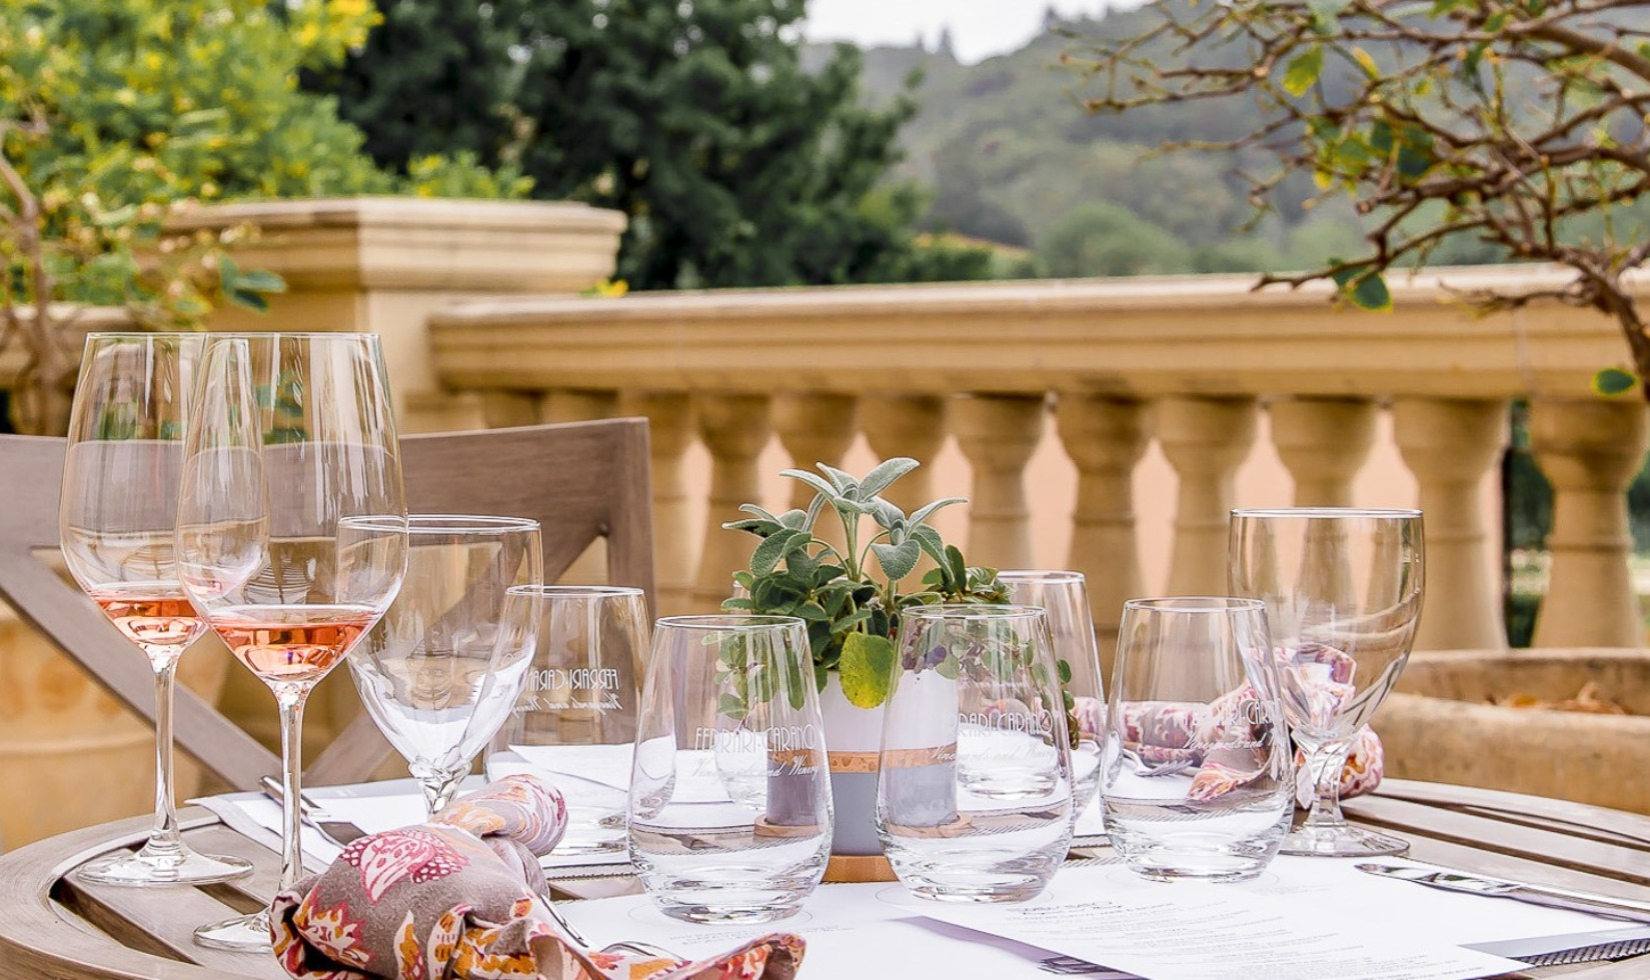 Table on terrace of winery estate in Italian villa style